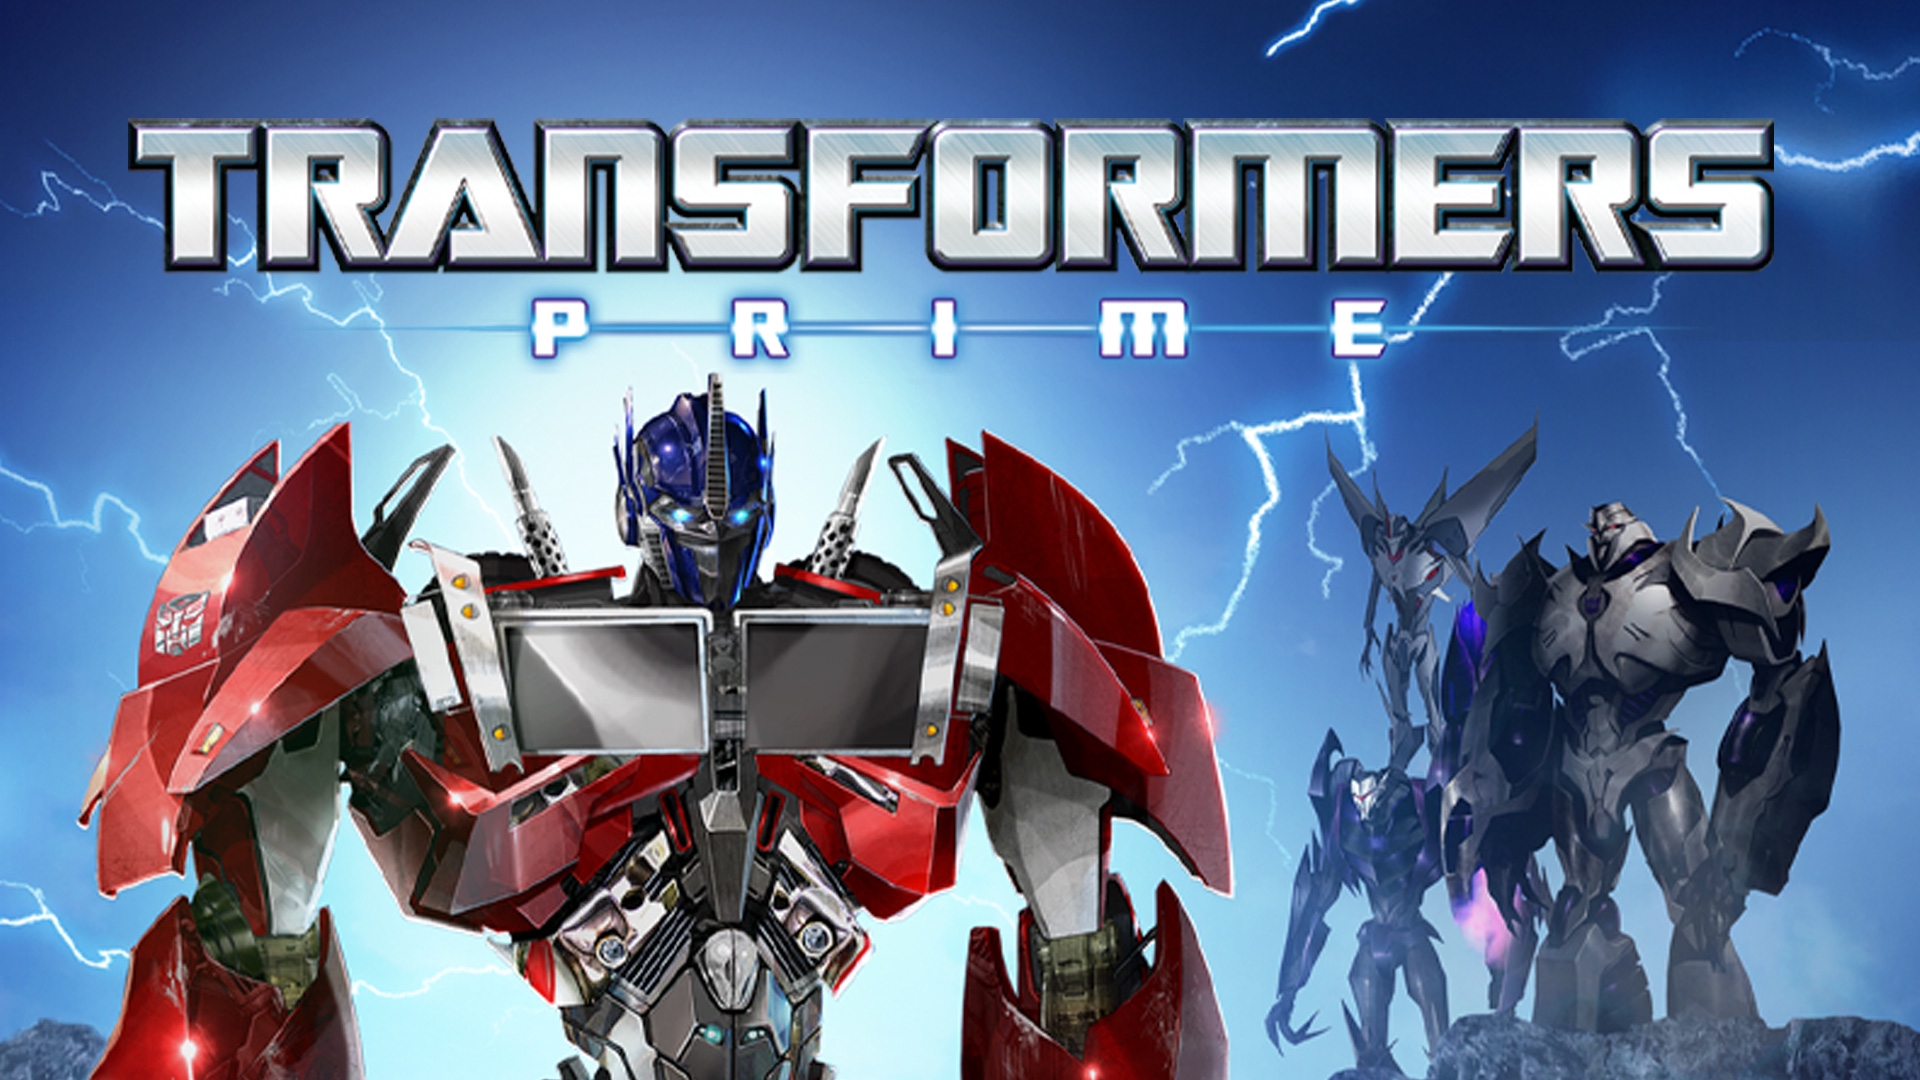 Watch Transformers: Prime Online, Stream Seasons 1-4 Now